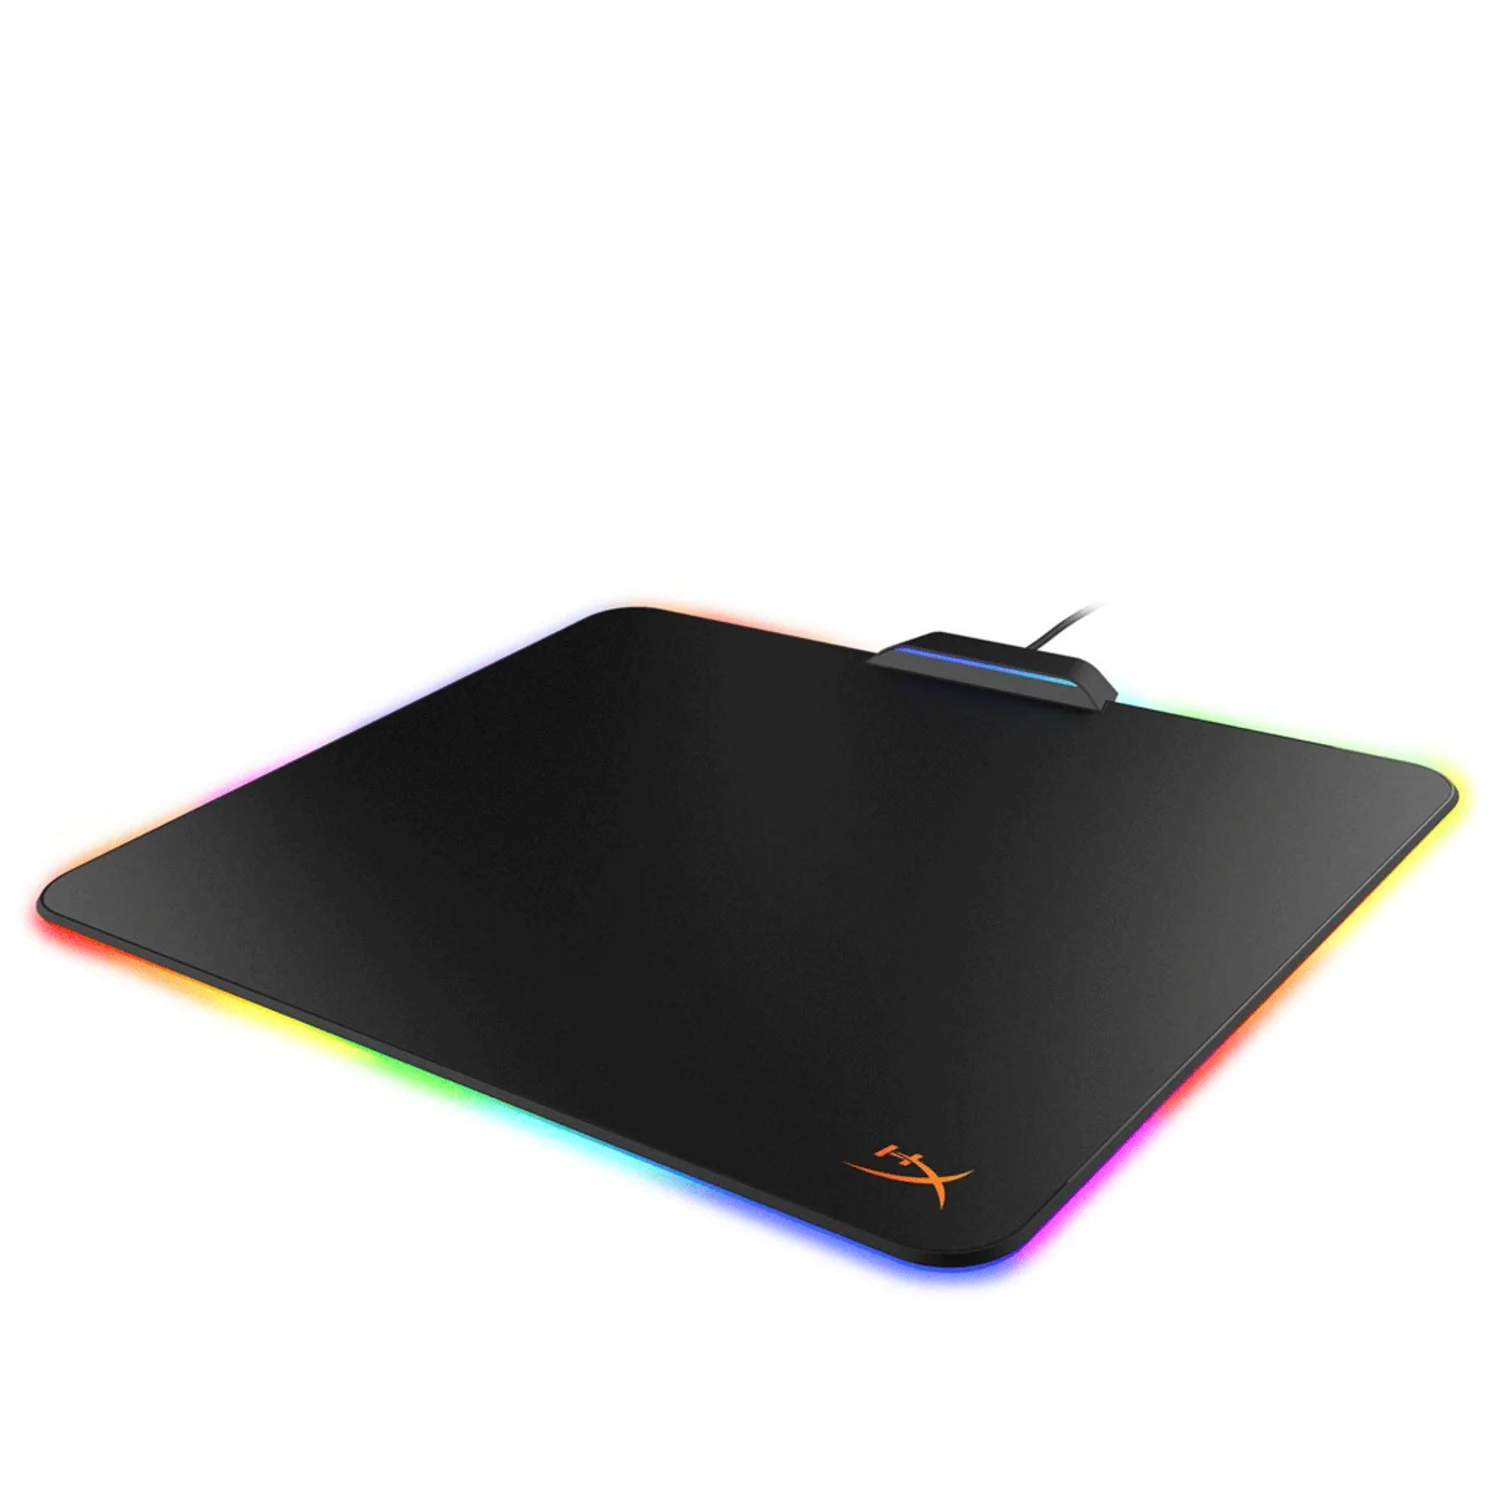 Mousepad Gamer Kingston HyperX Fury Ultra RGB - (HX-MPFU-M)